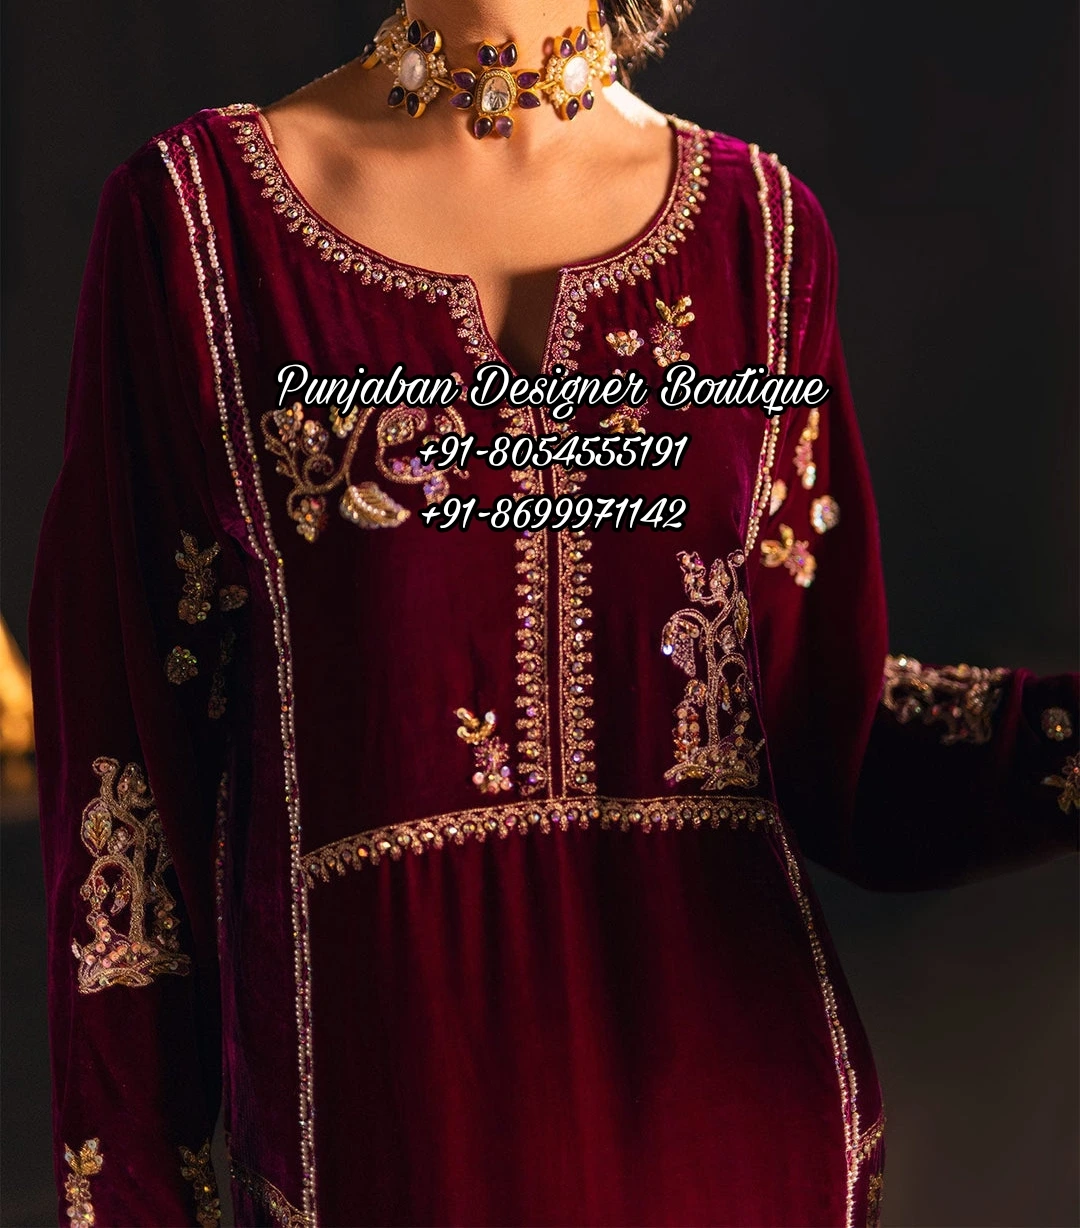 New Beautiful Neck Design | Unique Neck Design For Eid Dress | Gale Ka K...  | Churidar neck designs, Neck designs, Dress neck designs